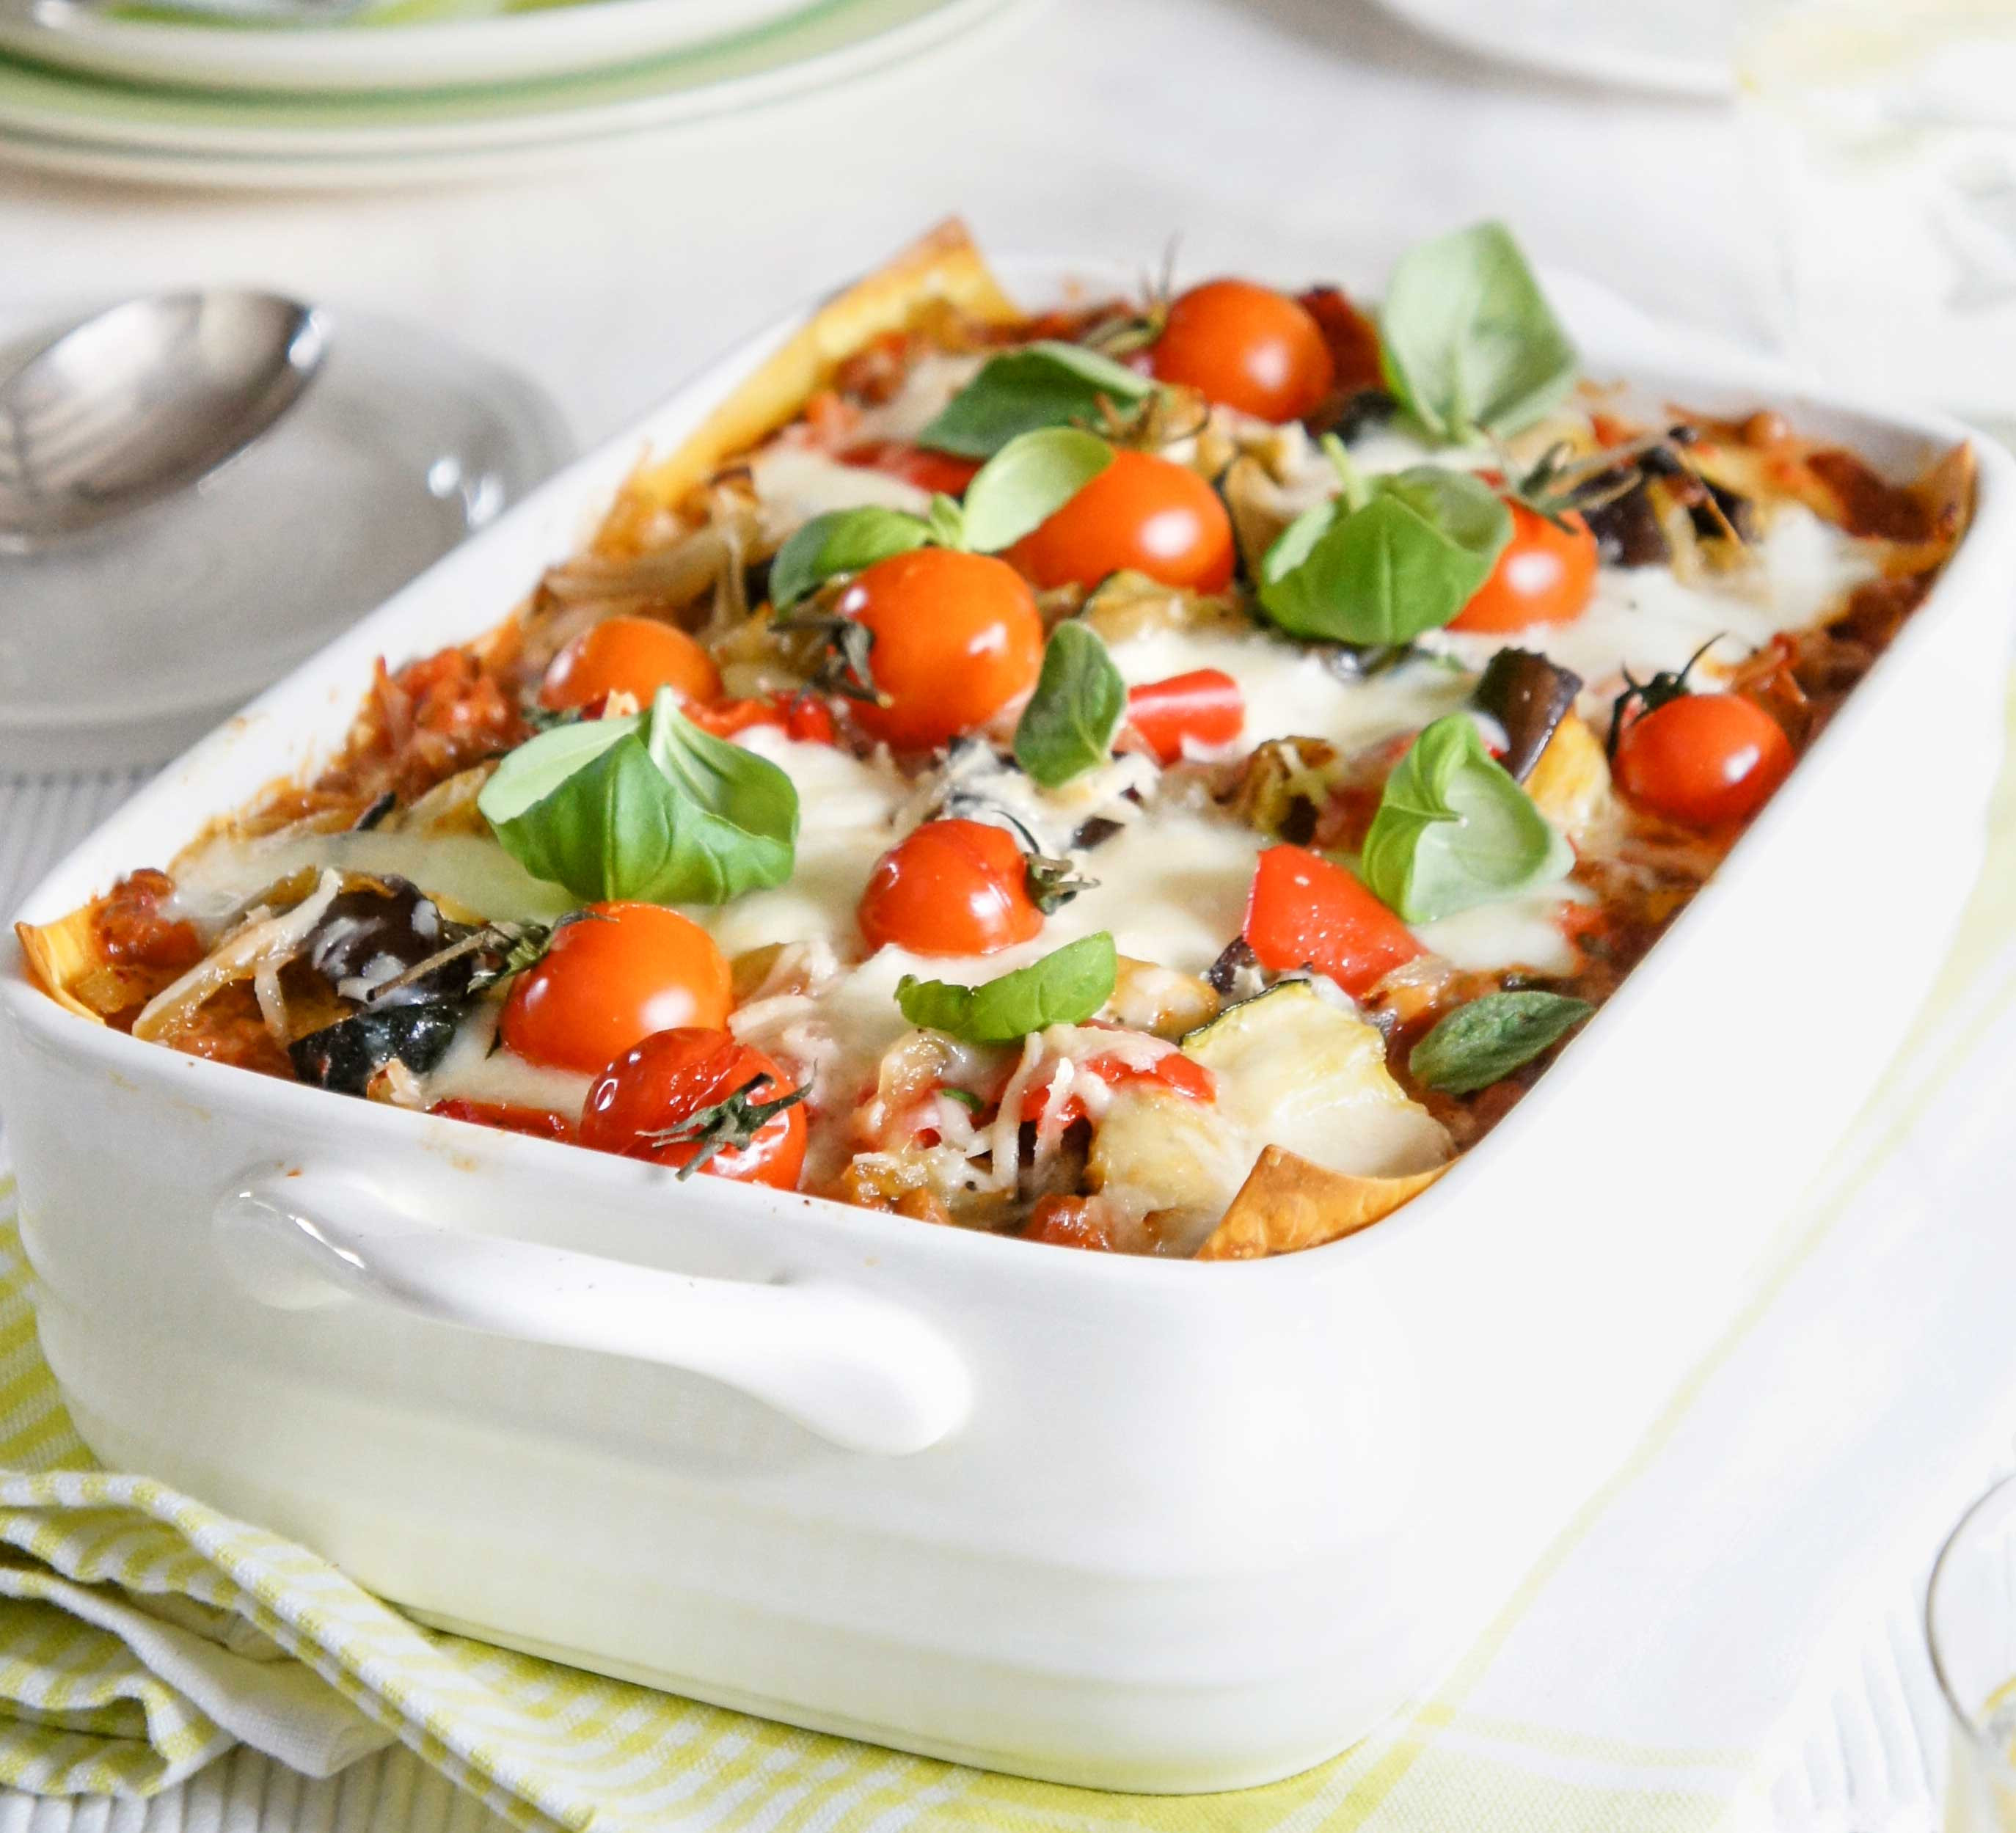 Vegetable Lasagna Recipes
 Lighter ve able lasagne recipe